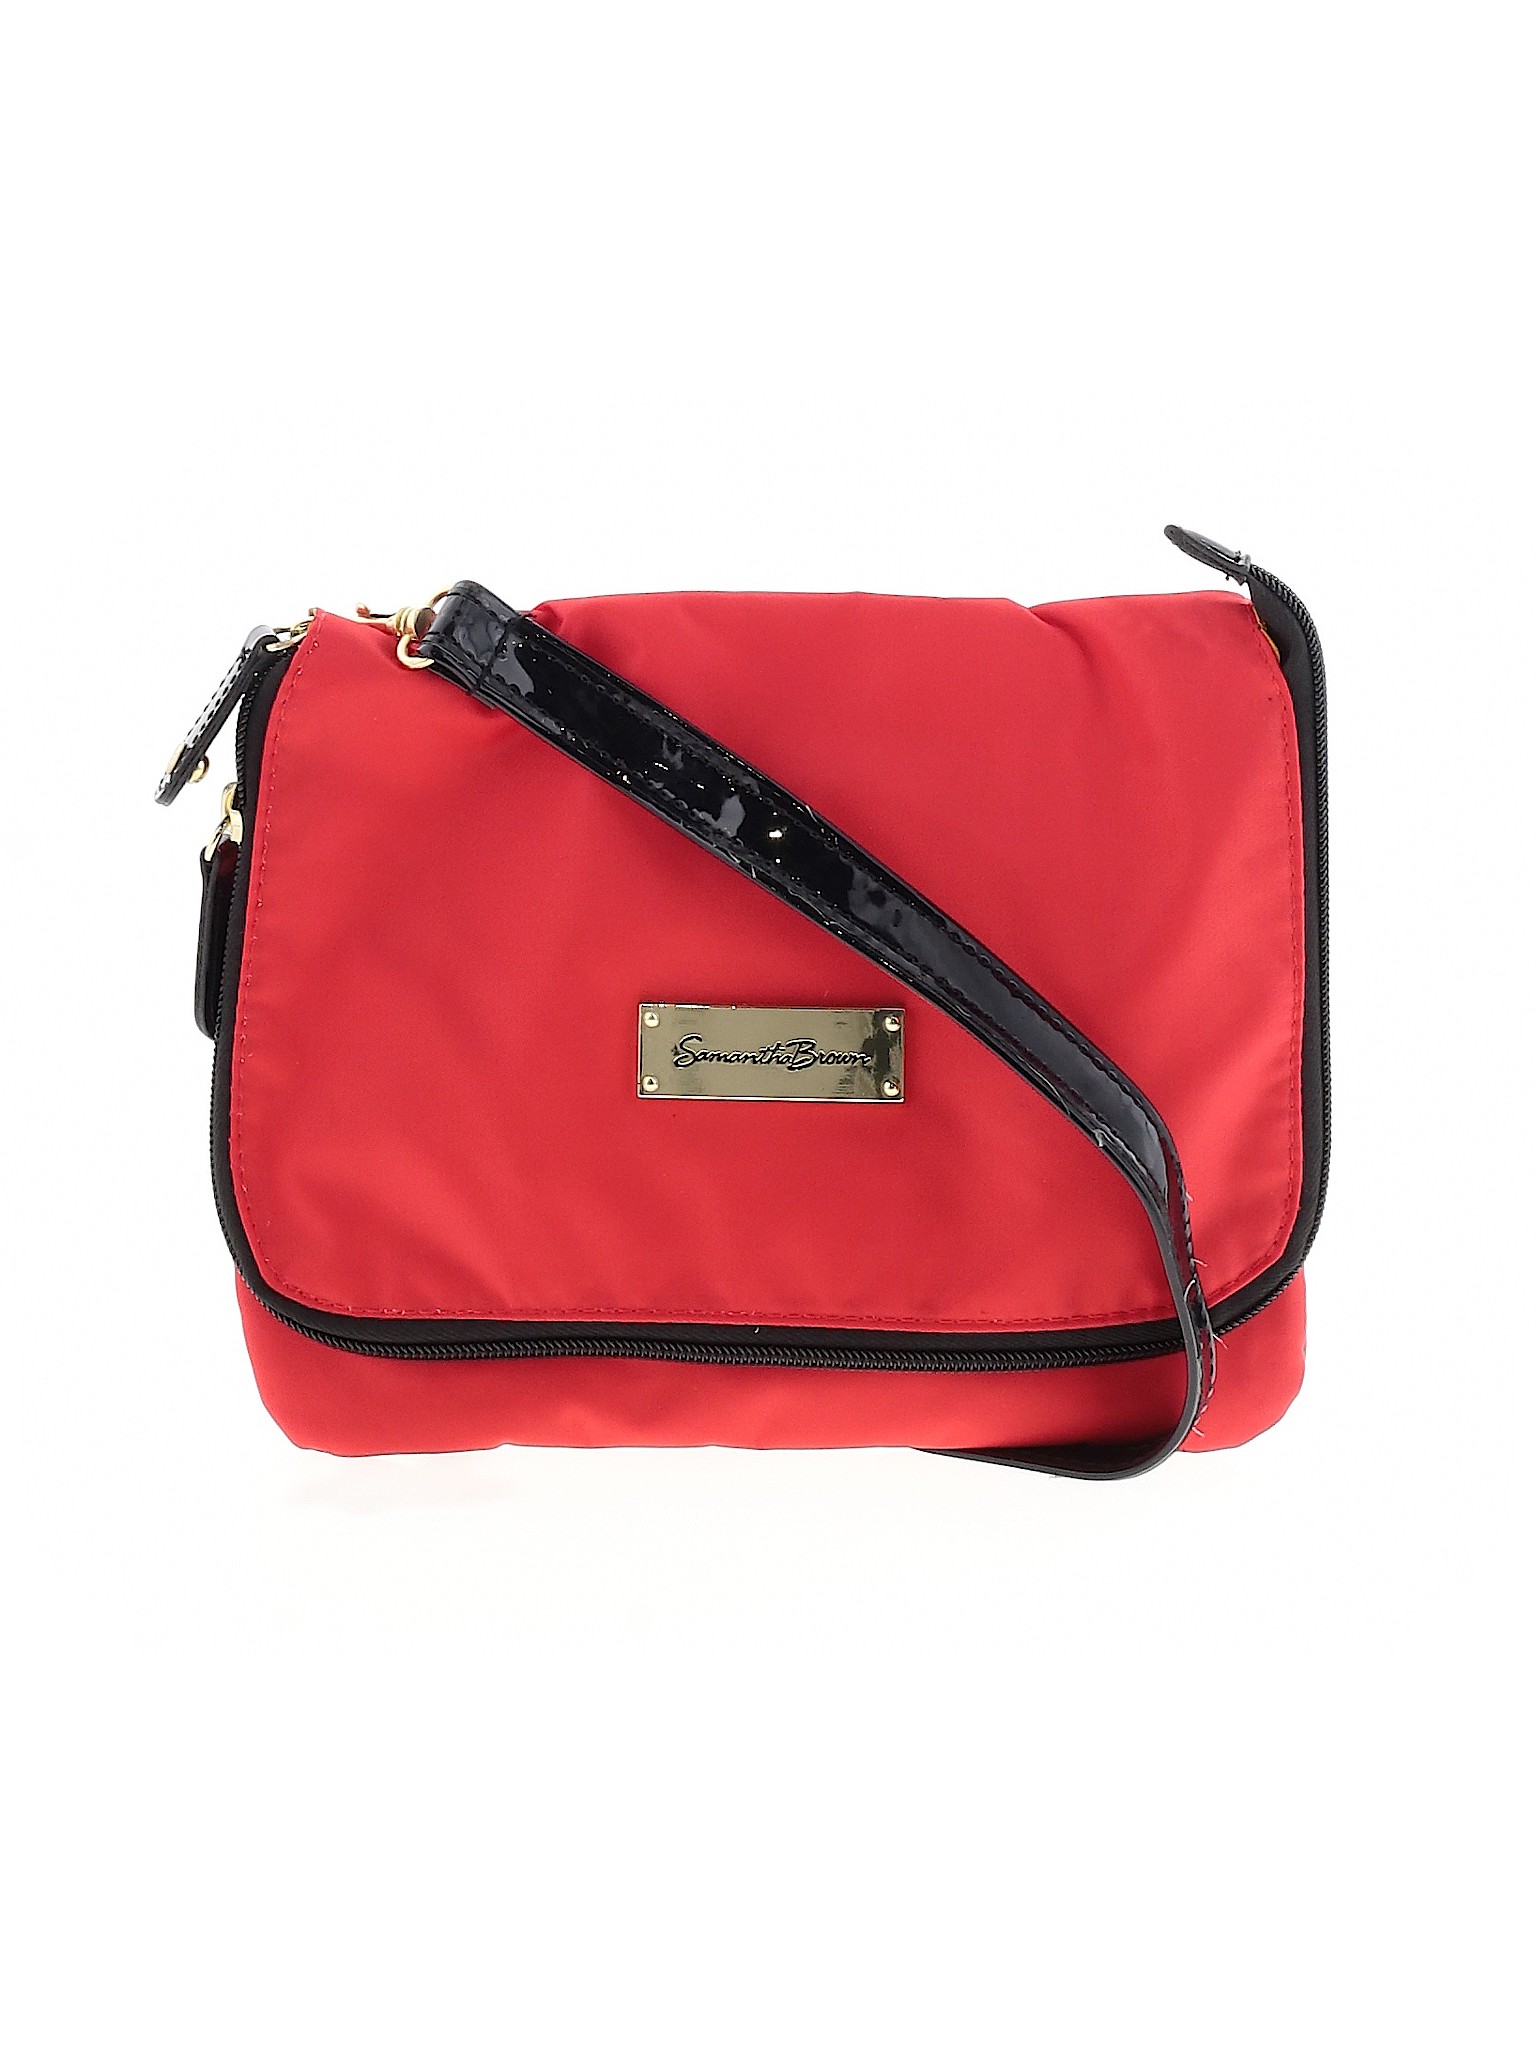 Samantha Brown Women Red Crossbody Bag One Size | eBay